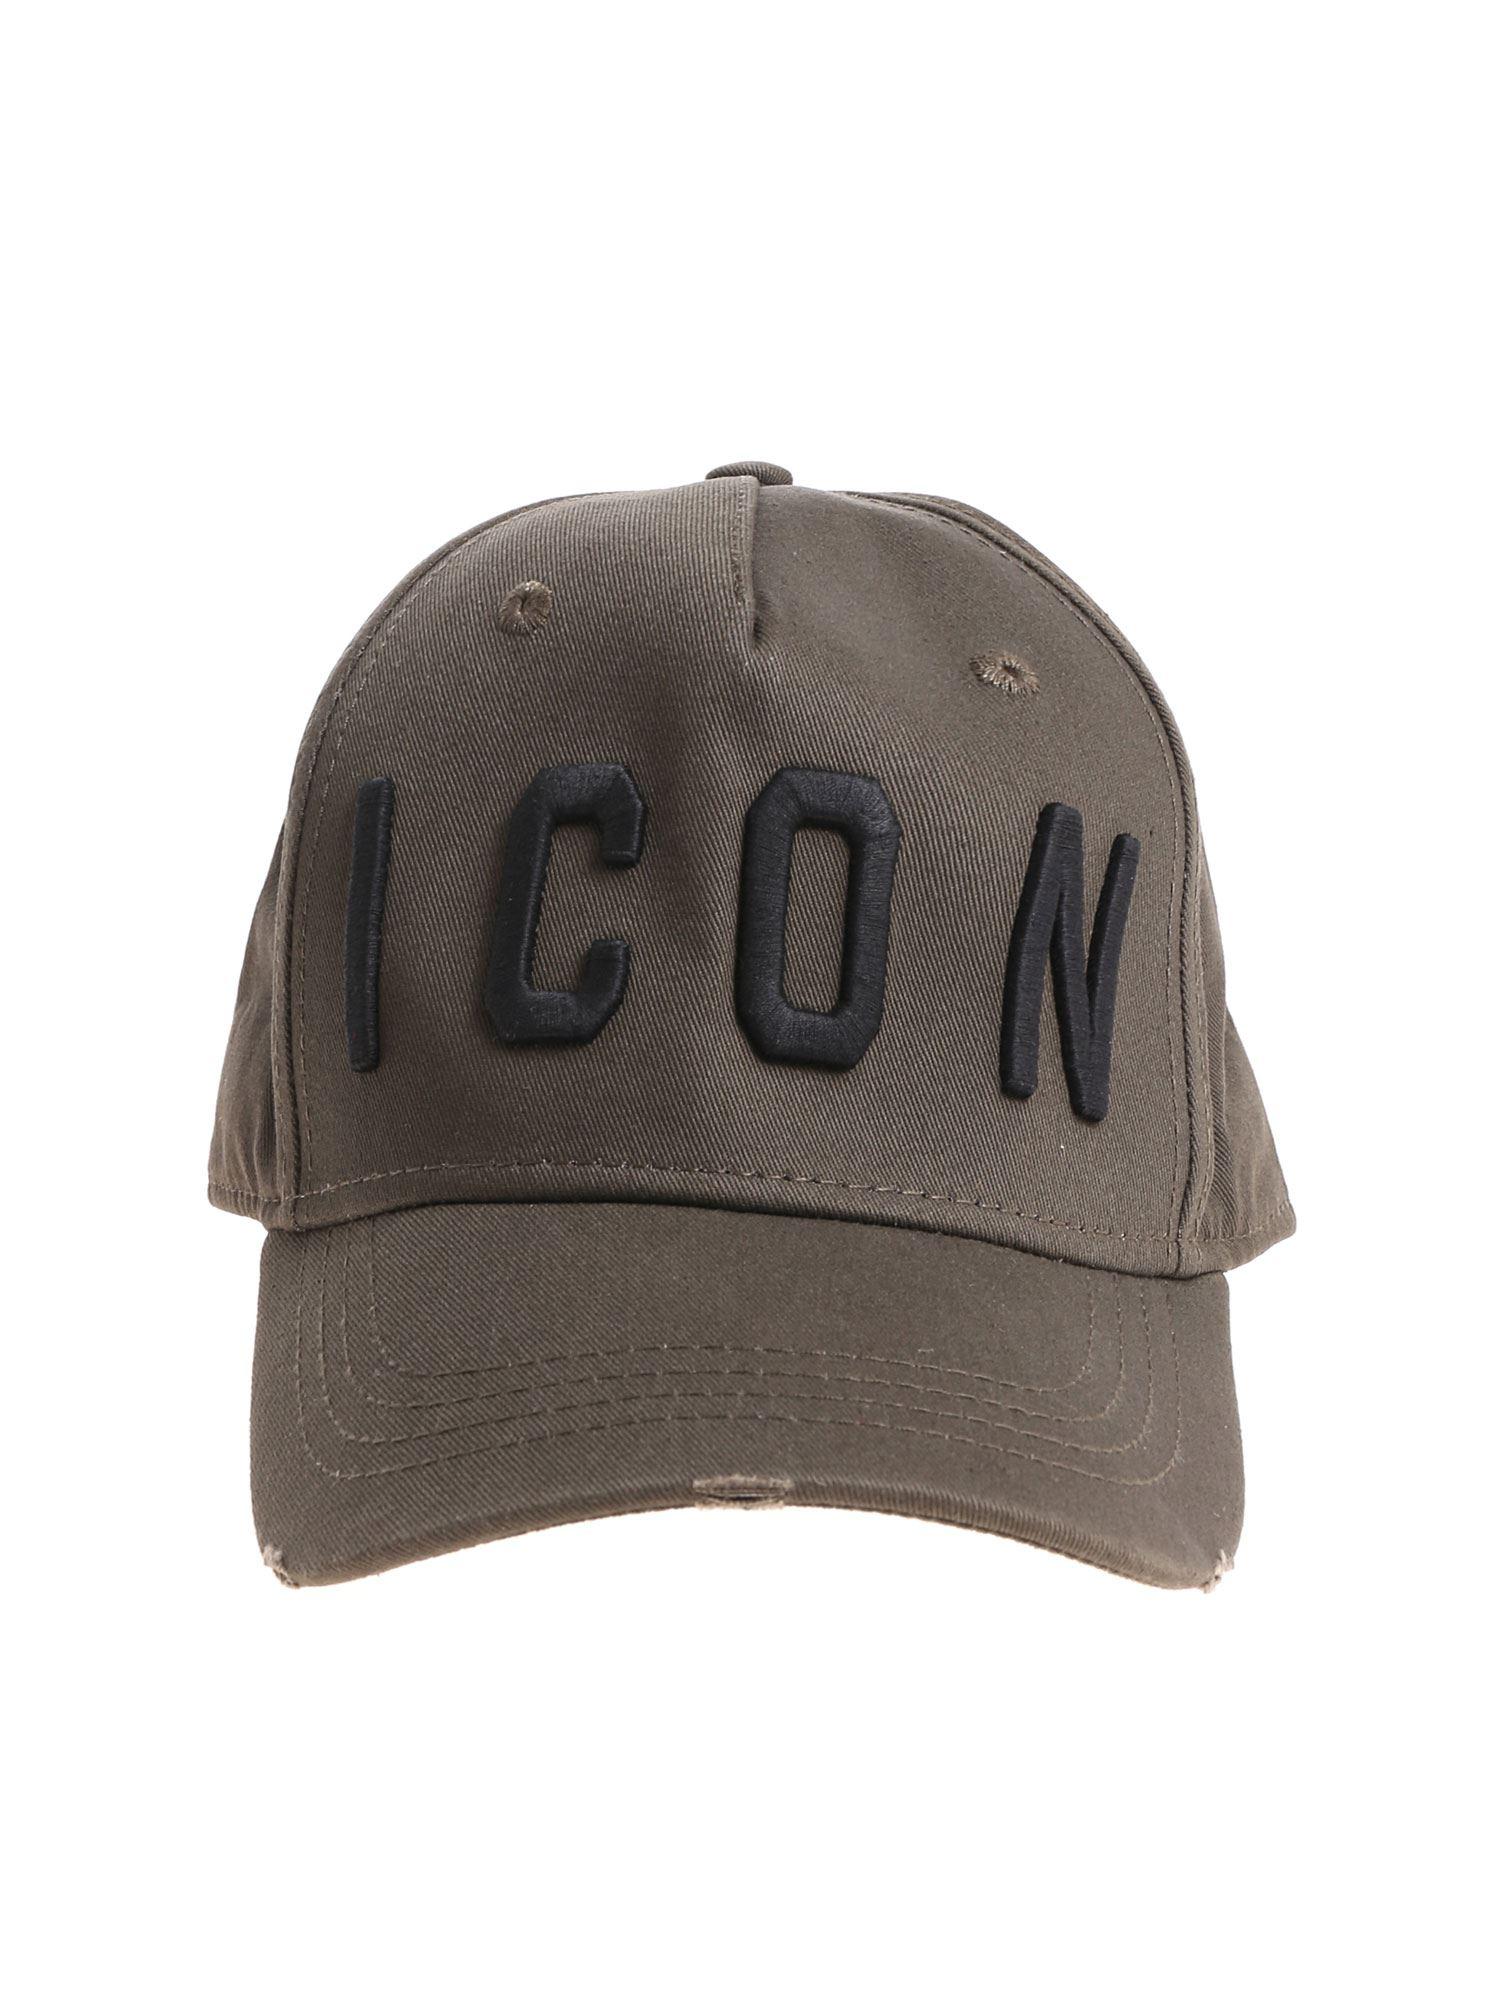 green icon cap